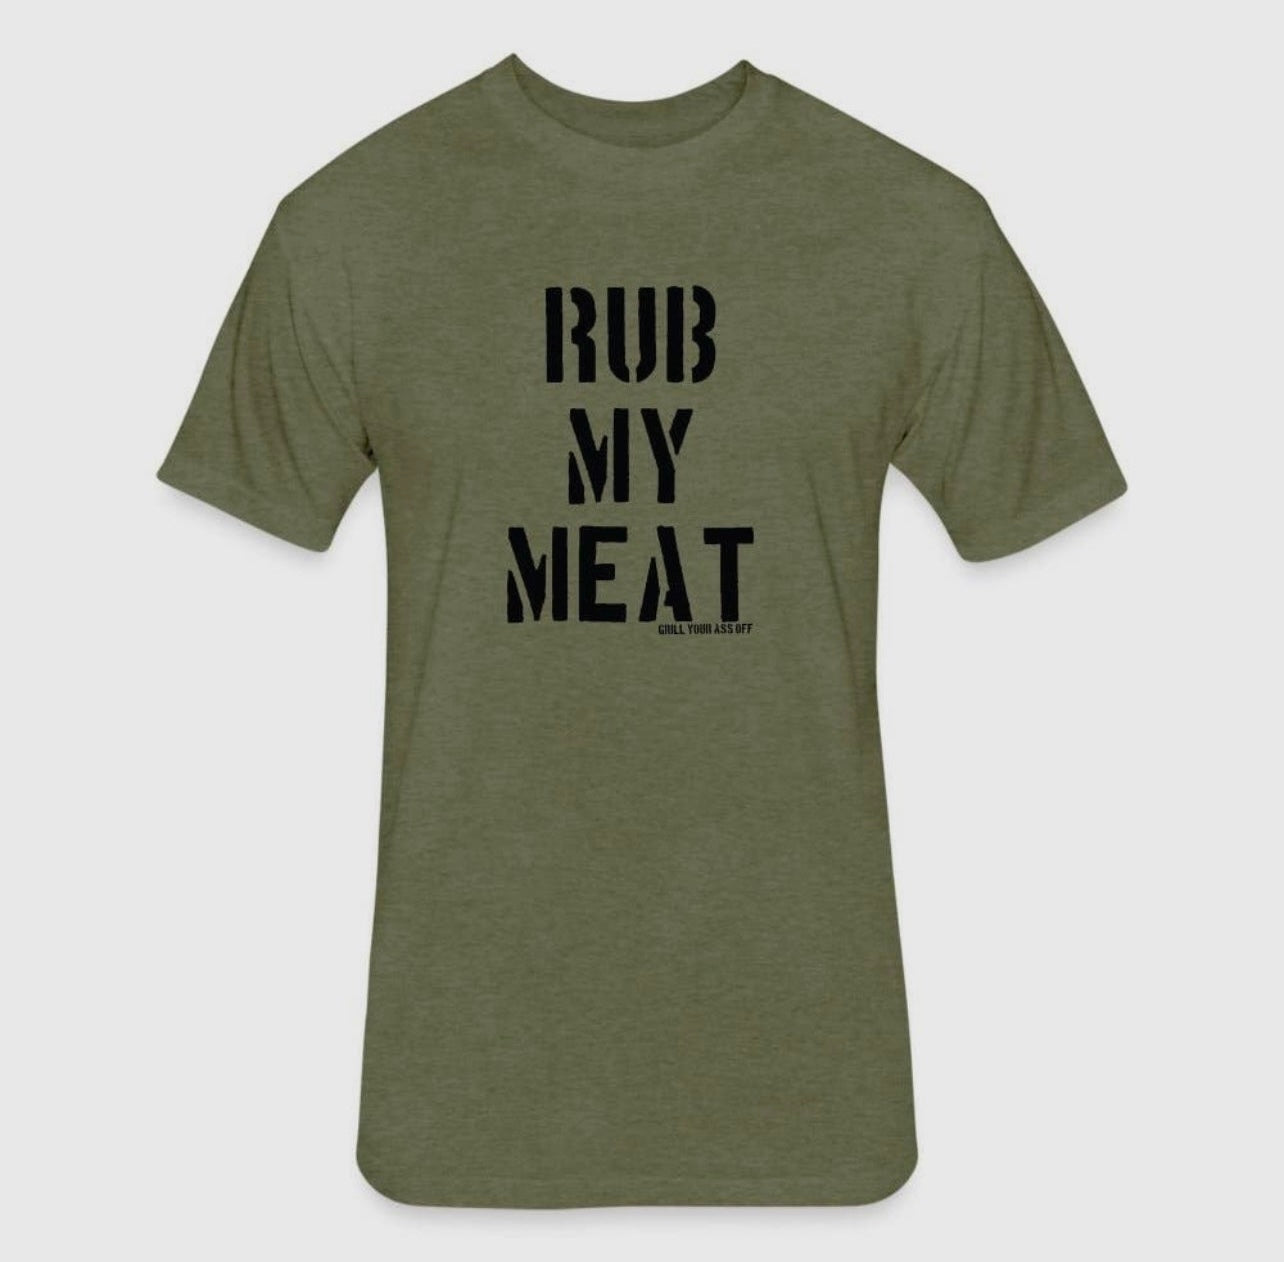 Rub my meat unisex tee shirt